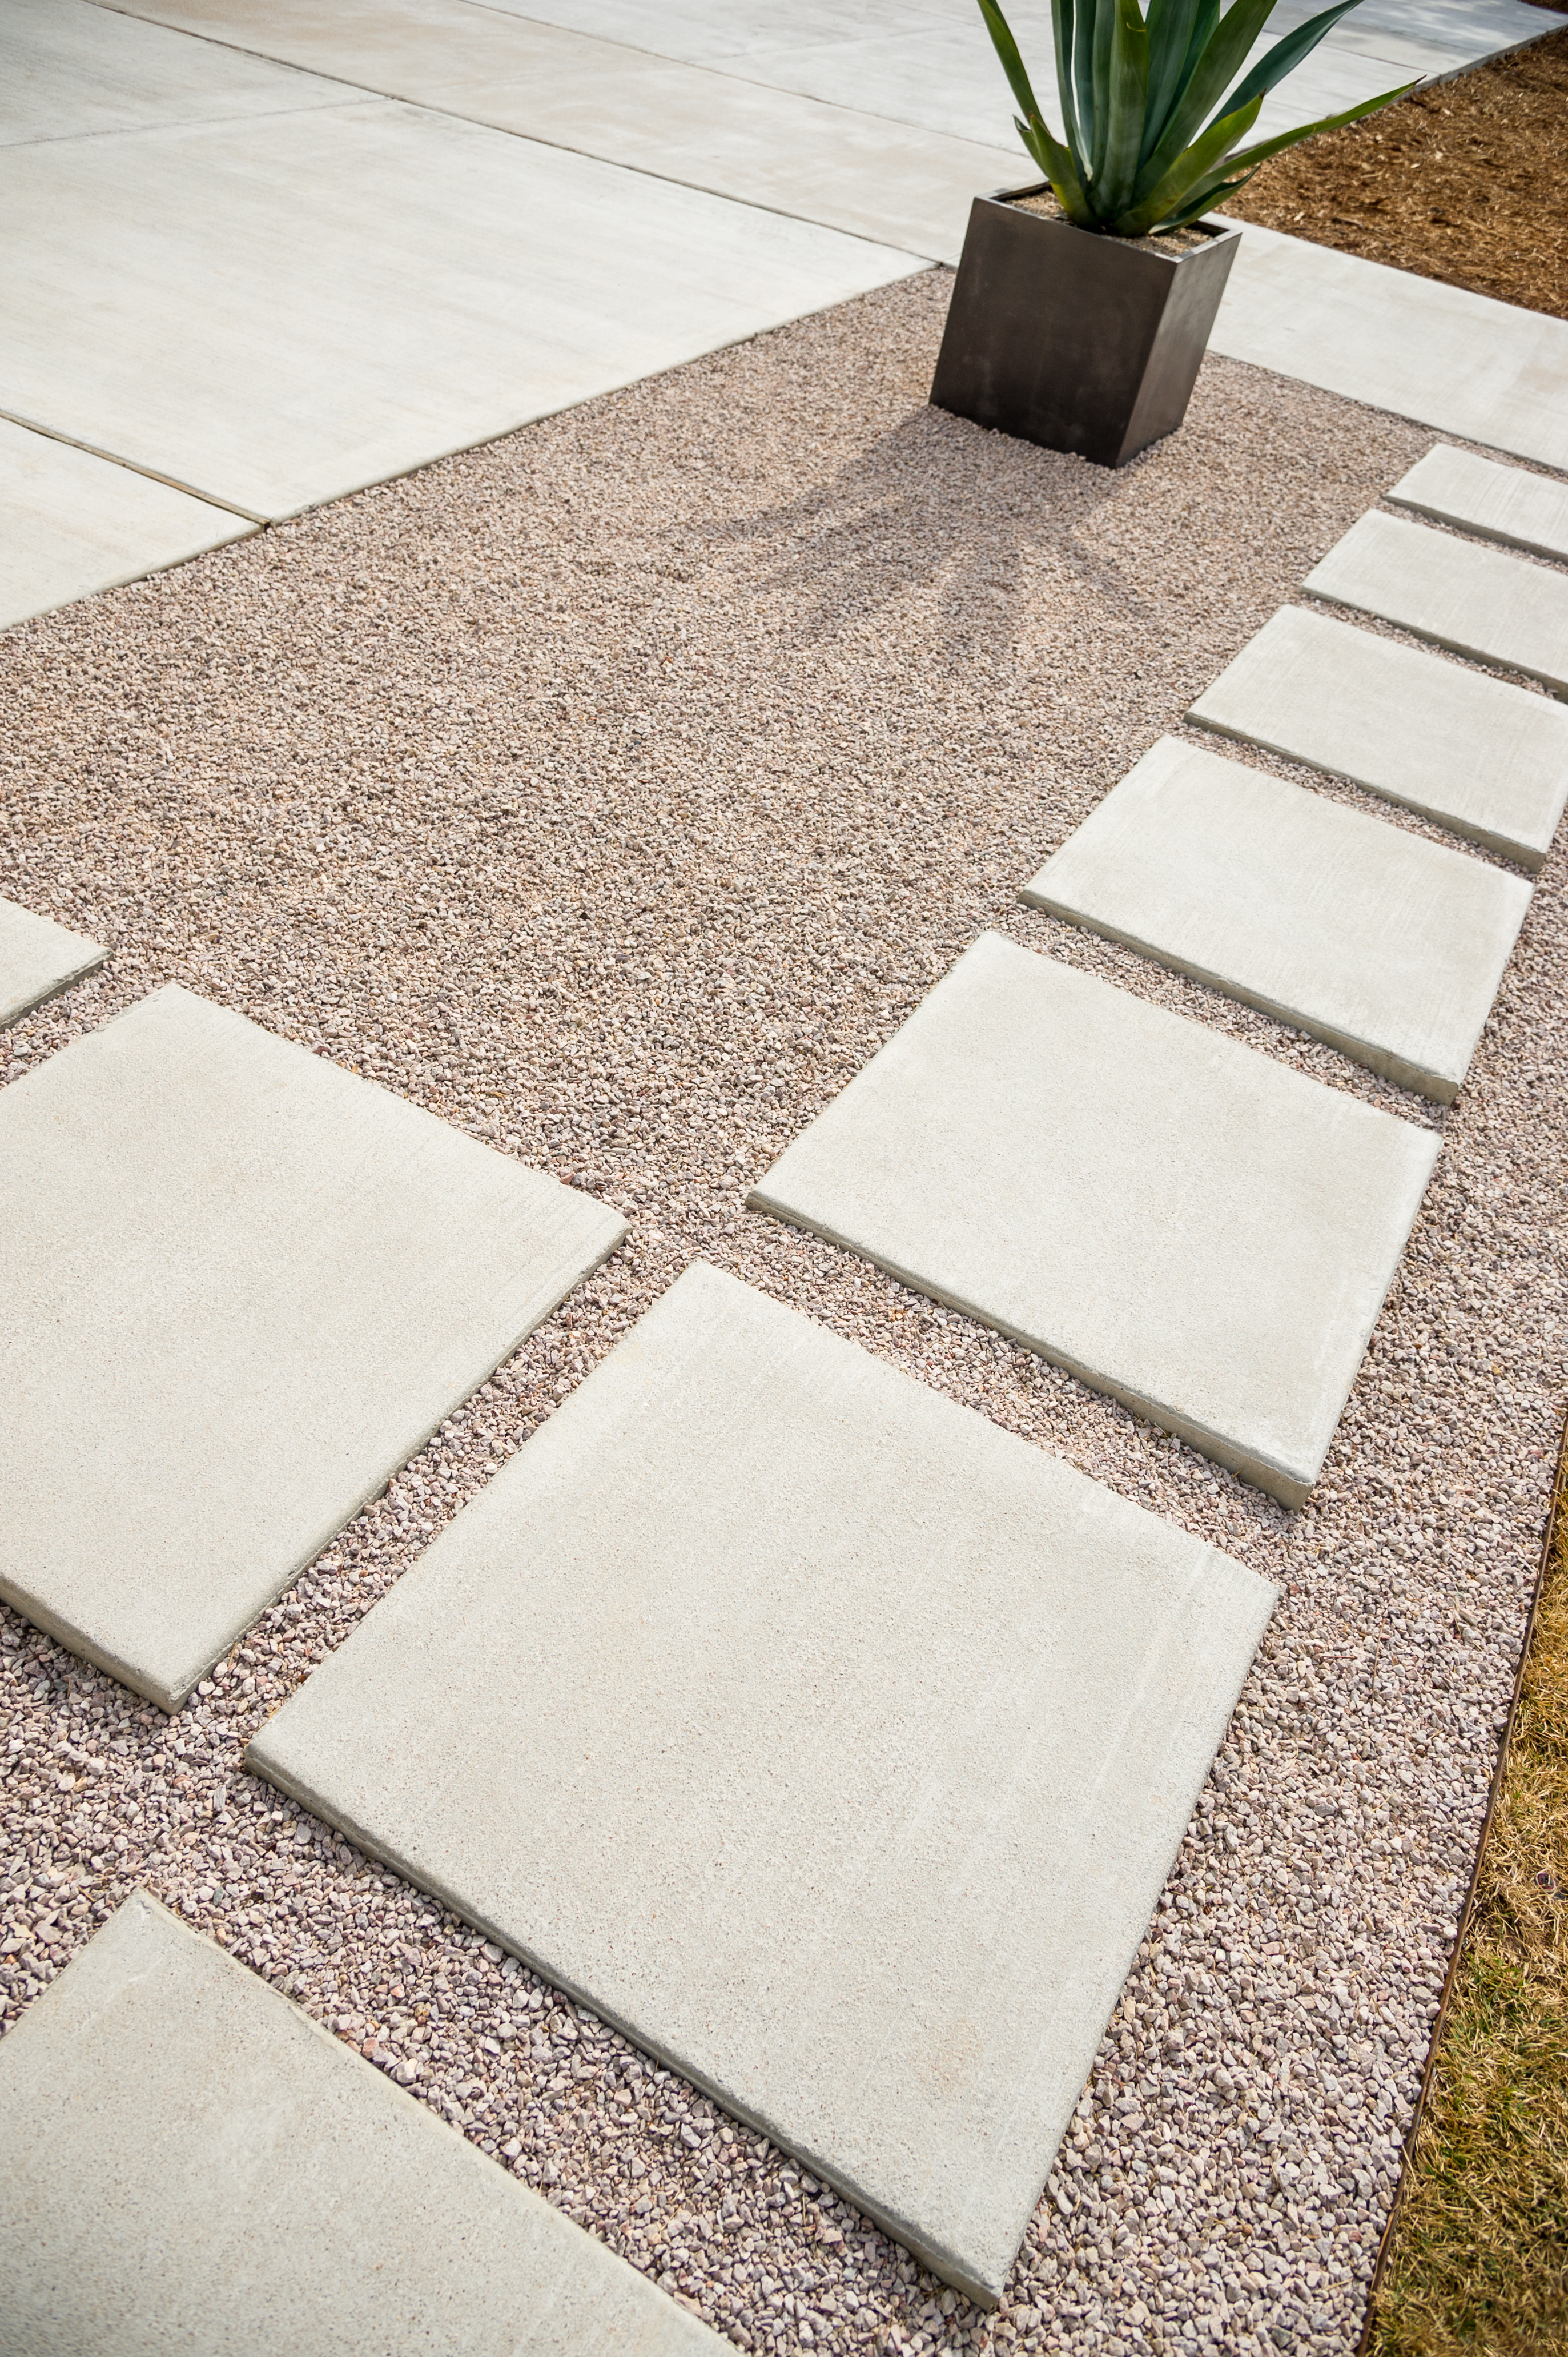 paver concrete patio ideas on a budget